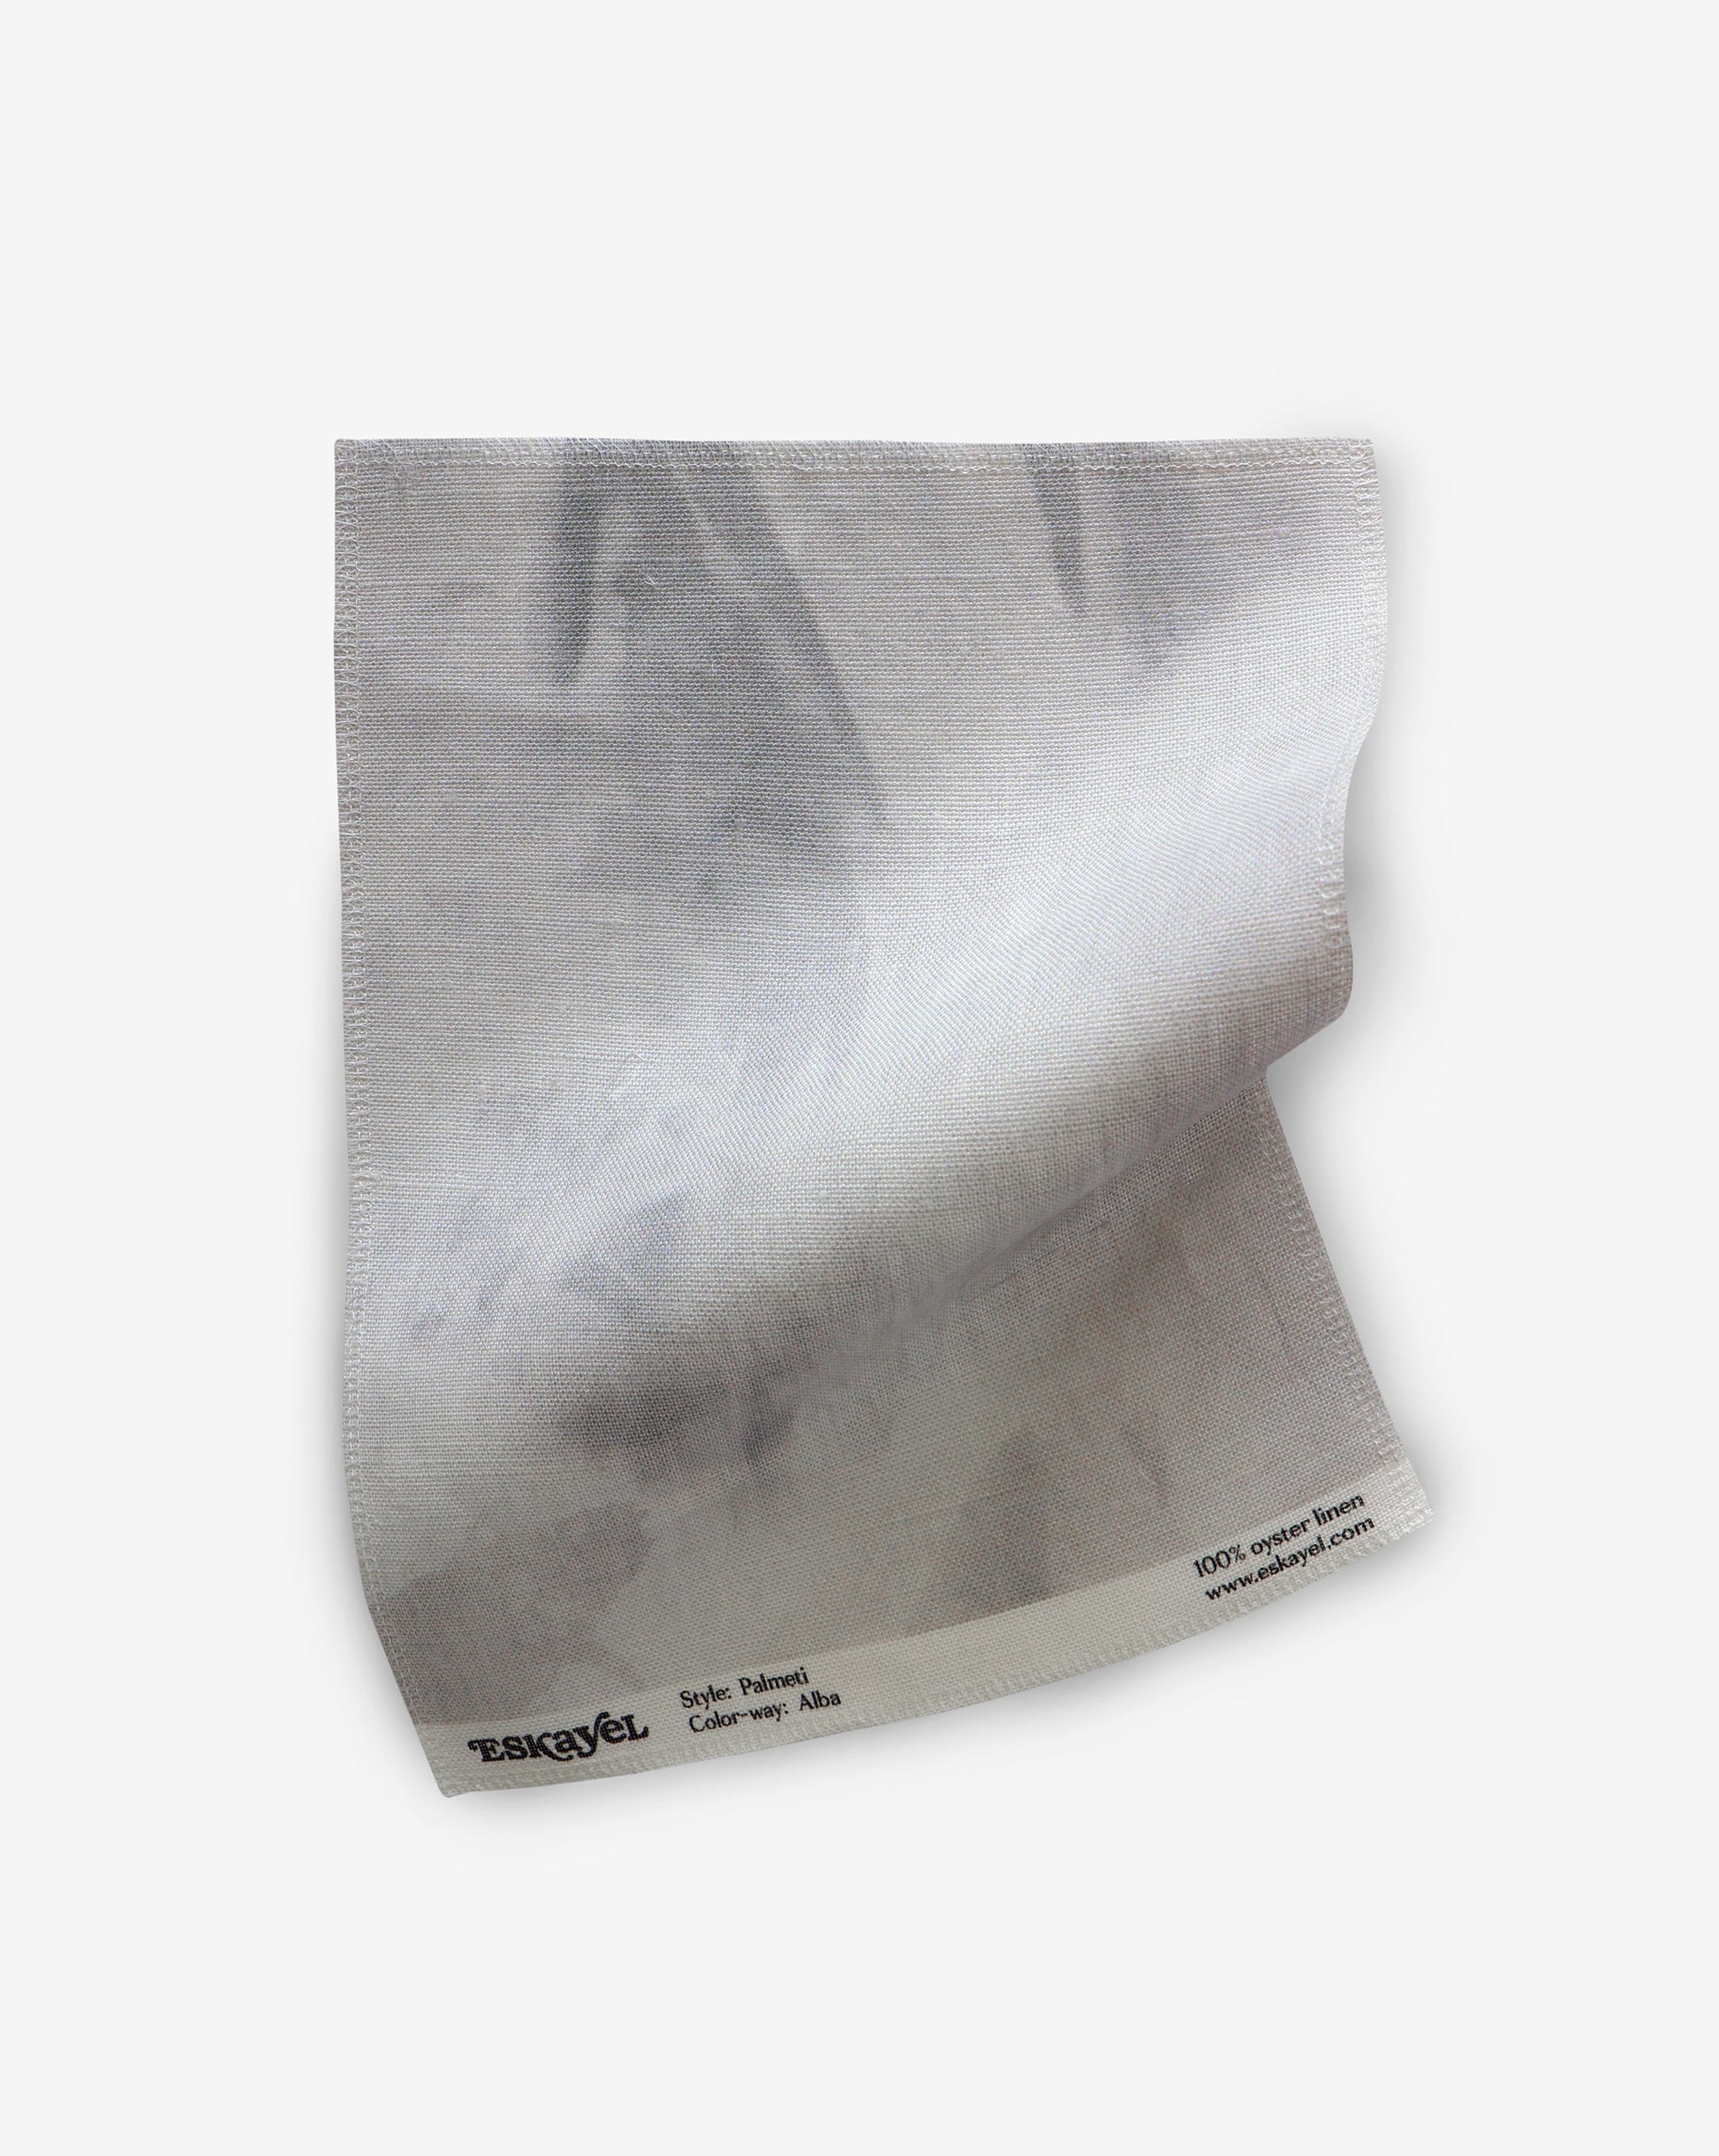 A Palmeti Fabric Sample Alba on a white surface